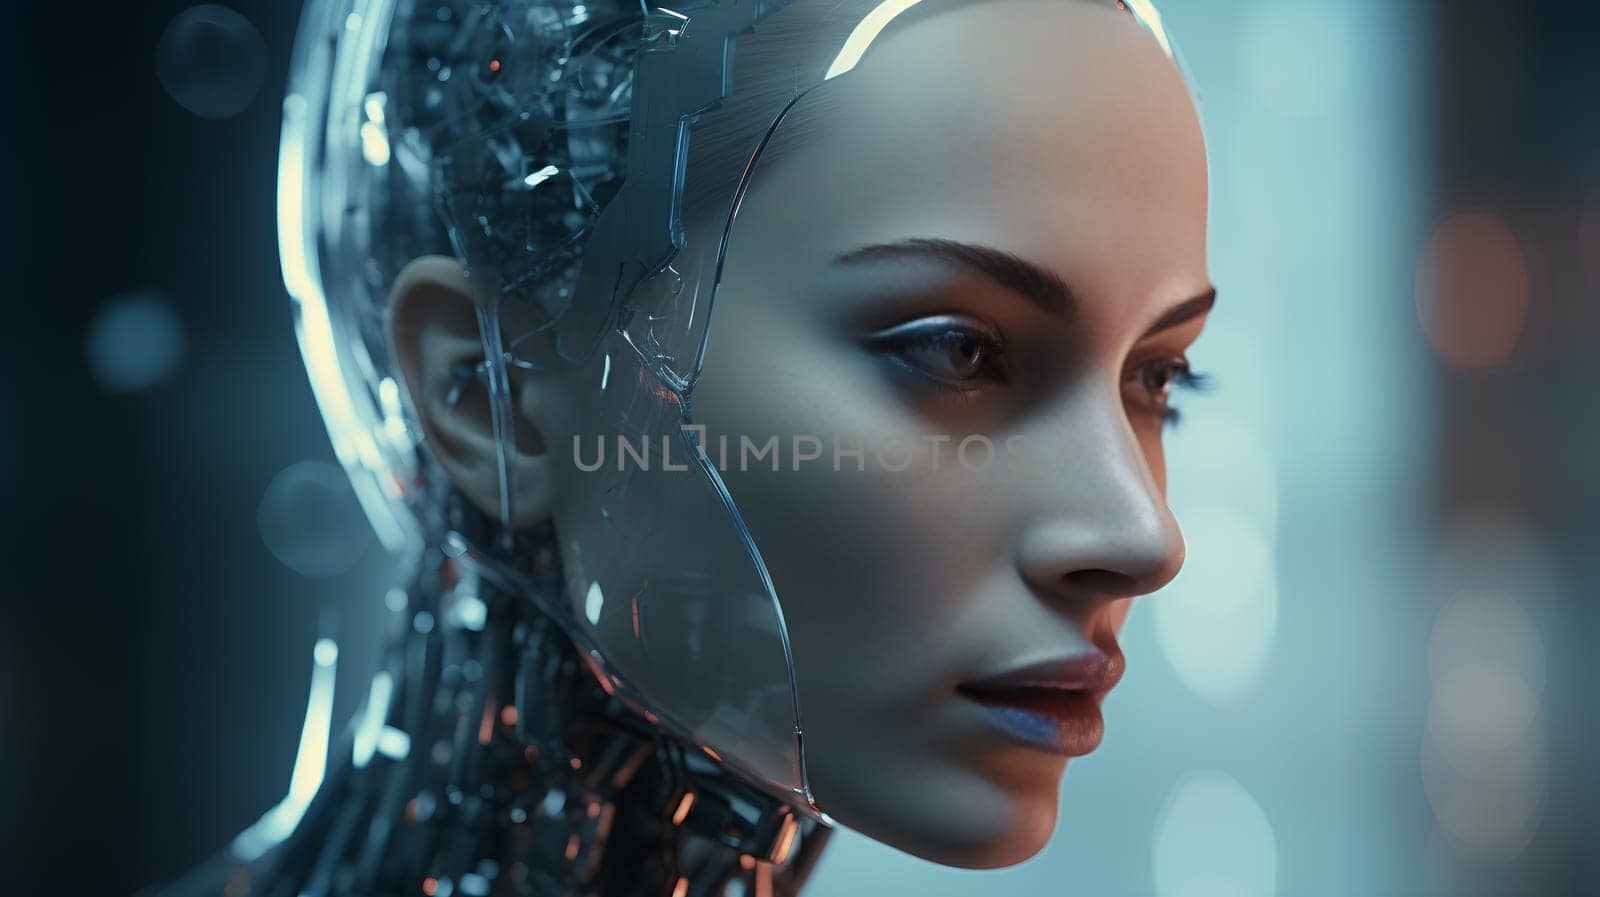 a woman in a cybernetic head looks futuristic cyberpunk style - generative AI by chrisroll